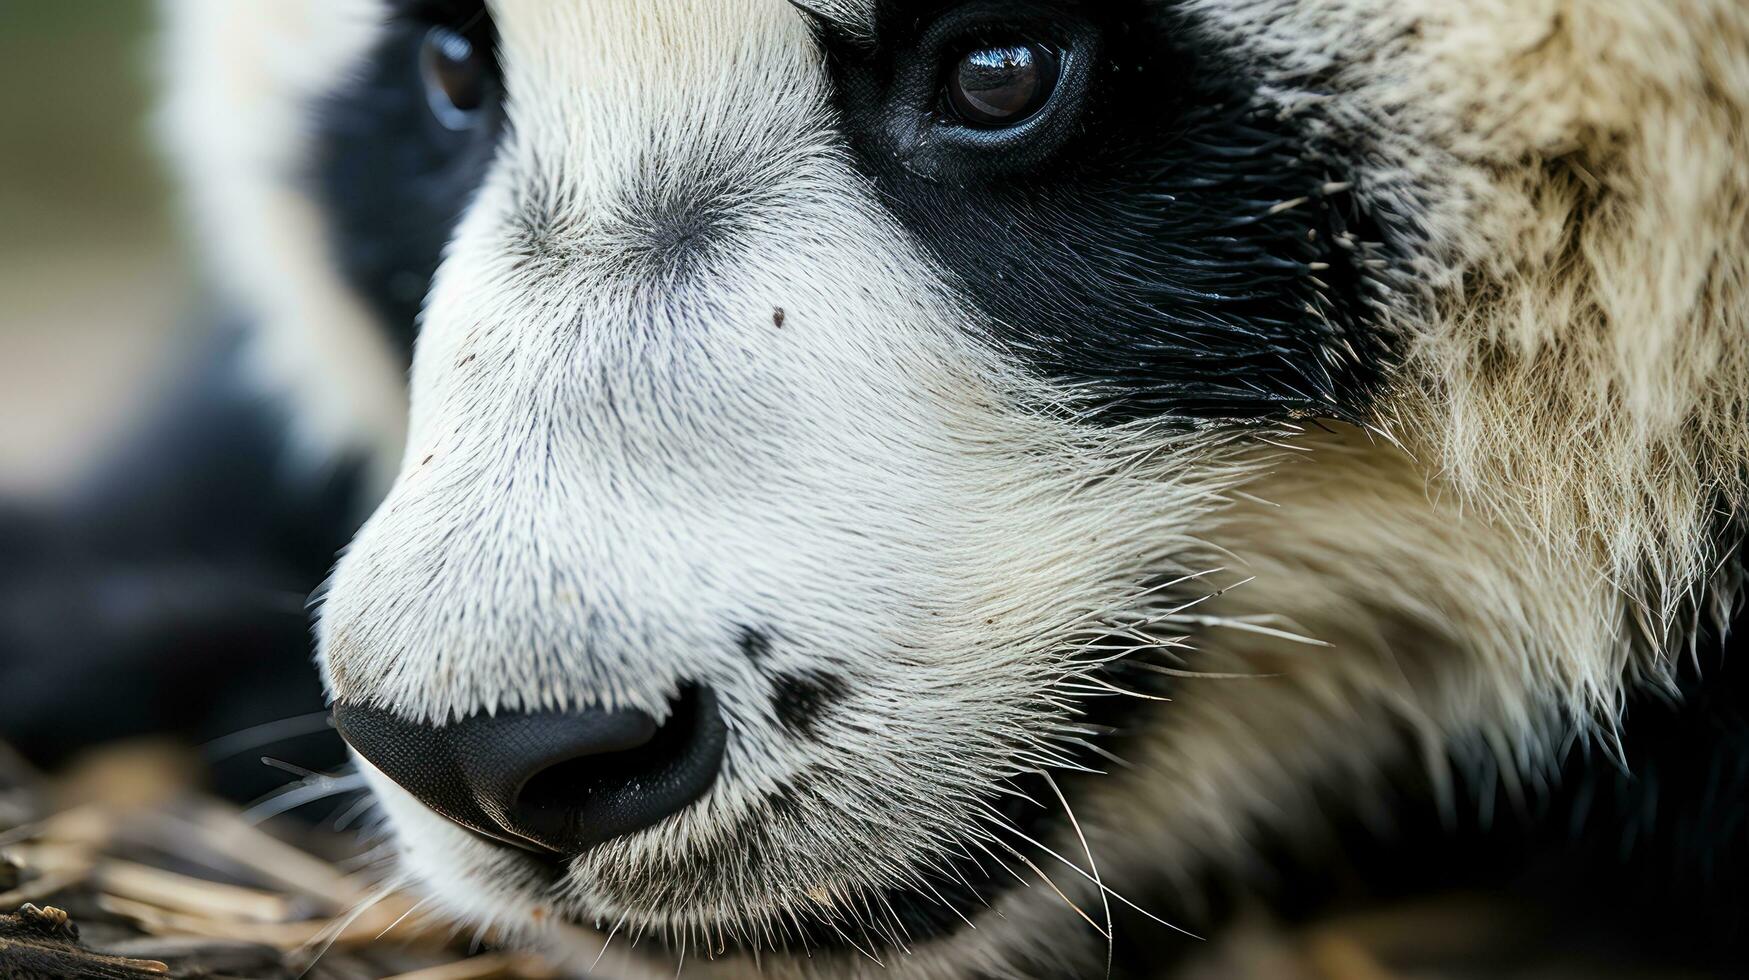 A close-up of a pandas paw with its unique photo